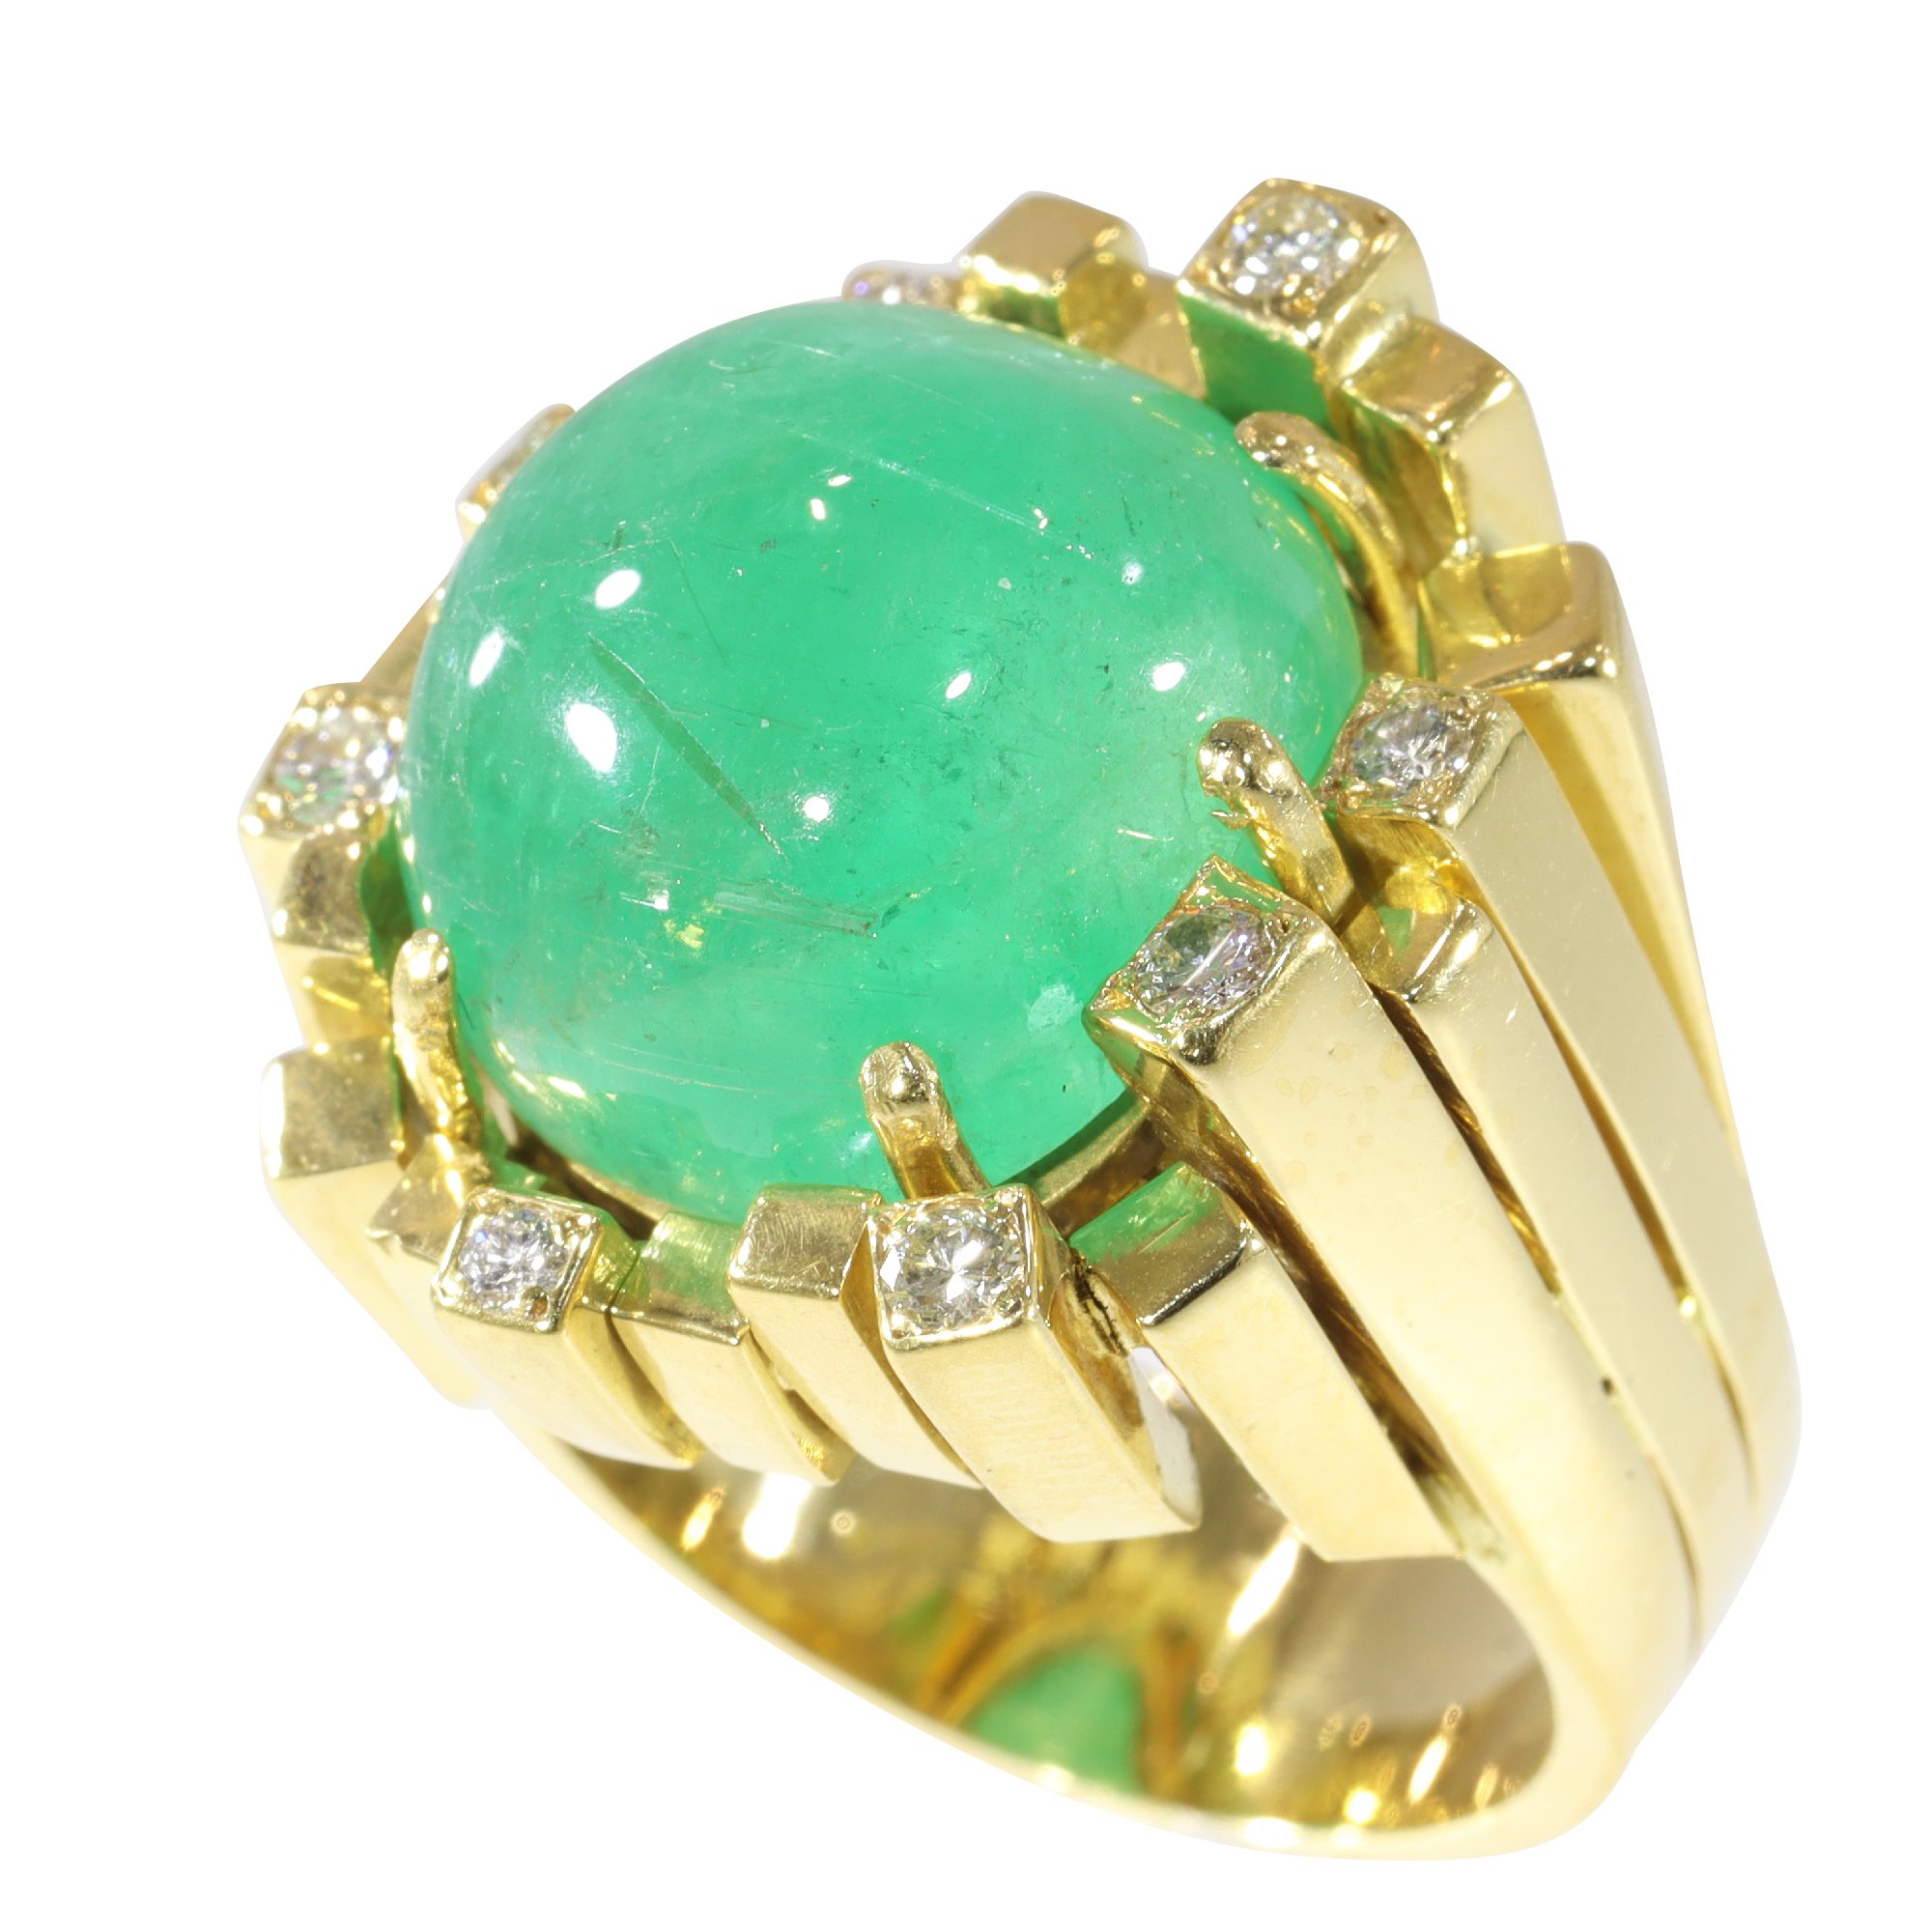 Seventies Chic: London Hallmarked Emerald and Diamond Ring